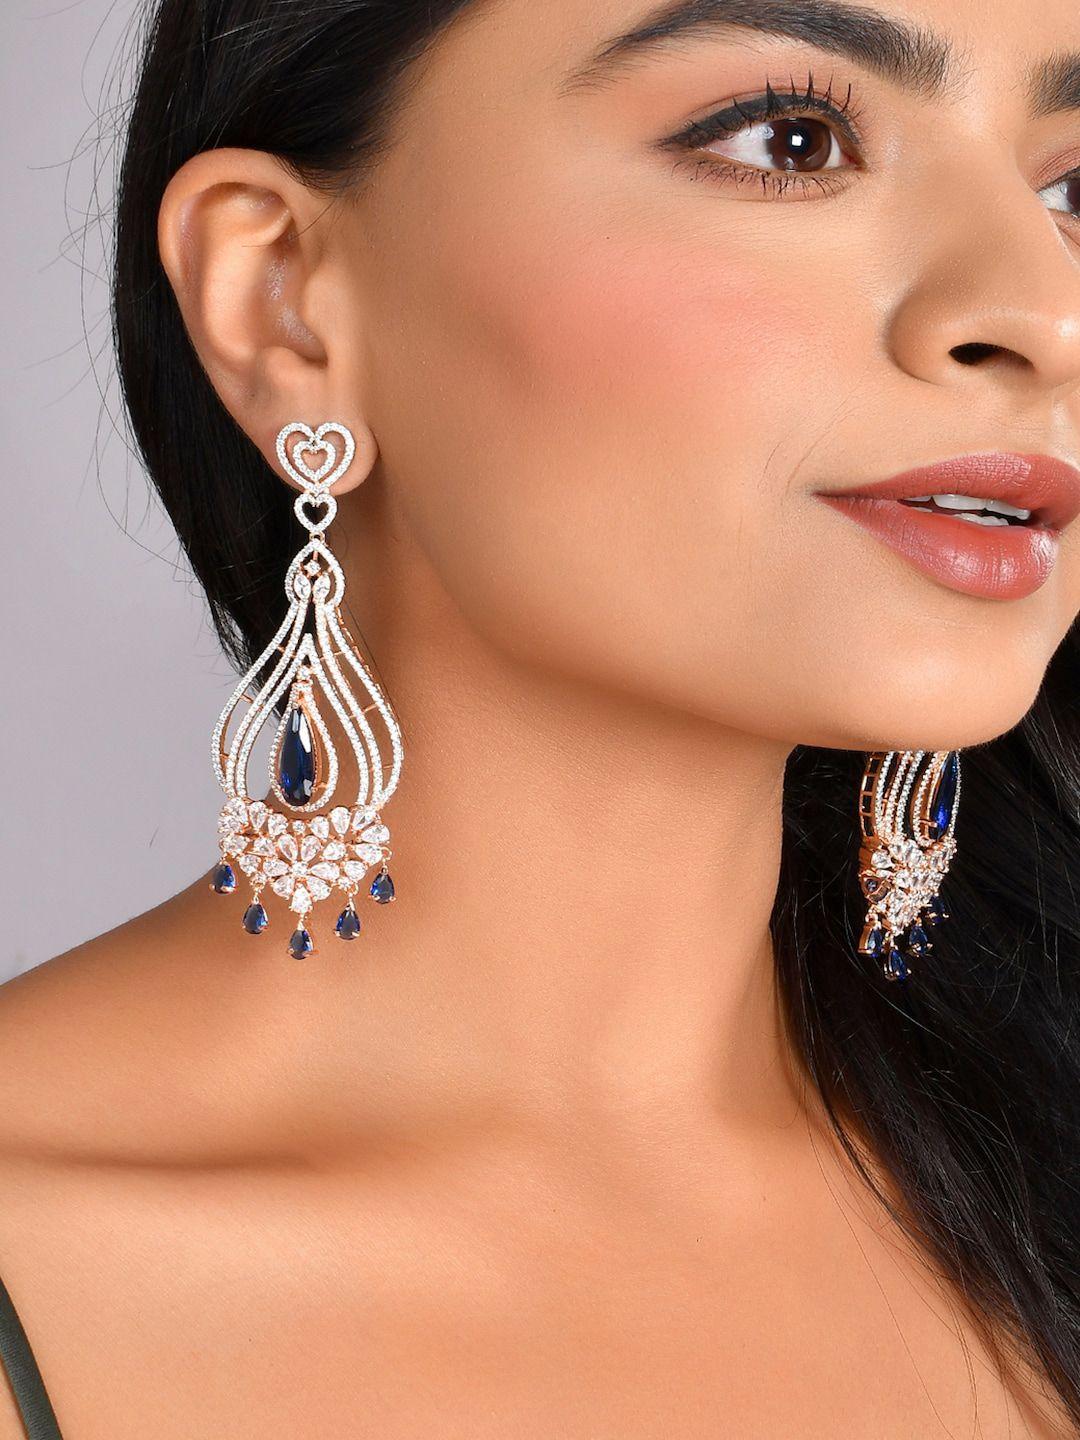 aquastreet rose gold-plated american diamond-studded drop earrings